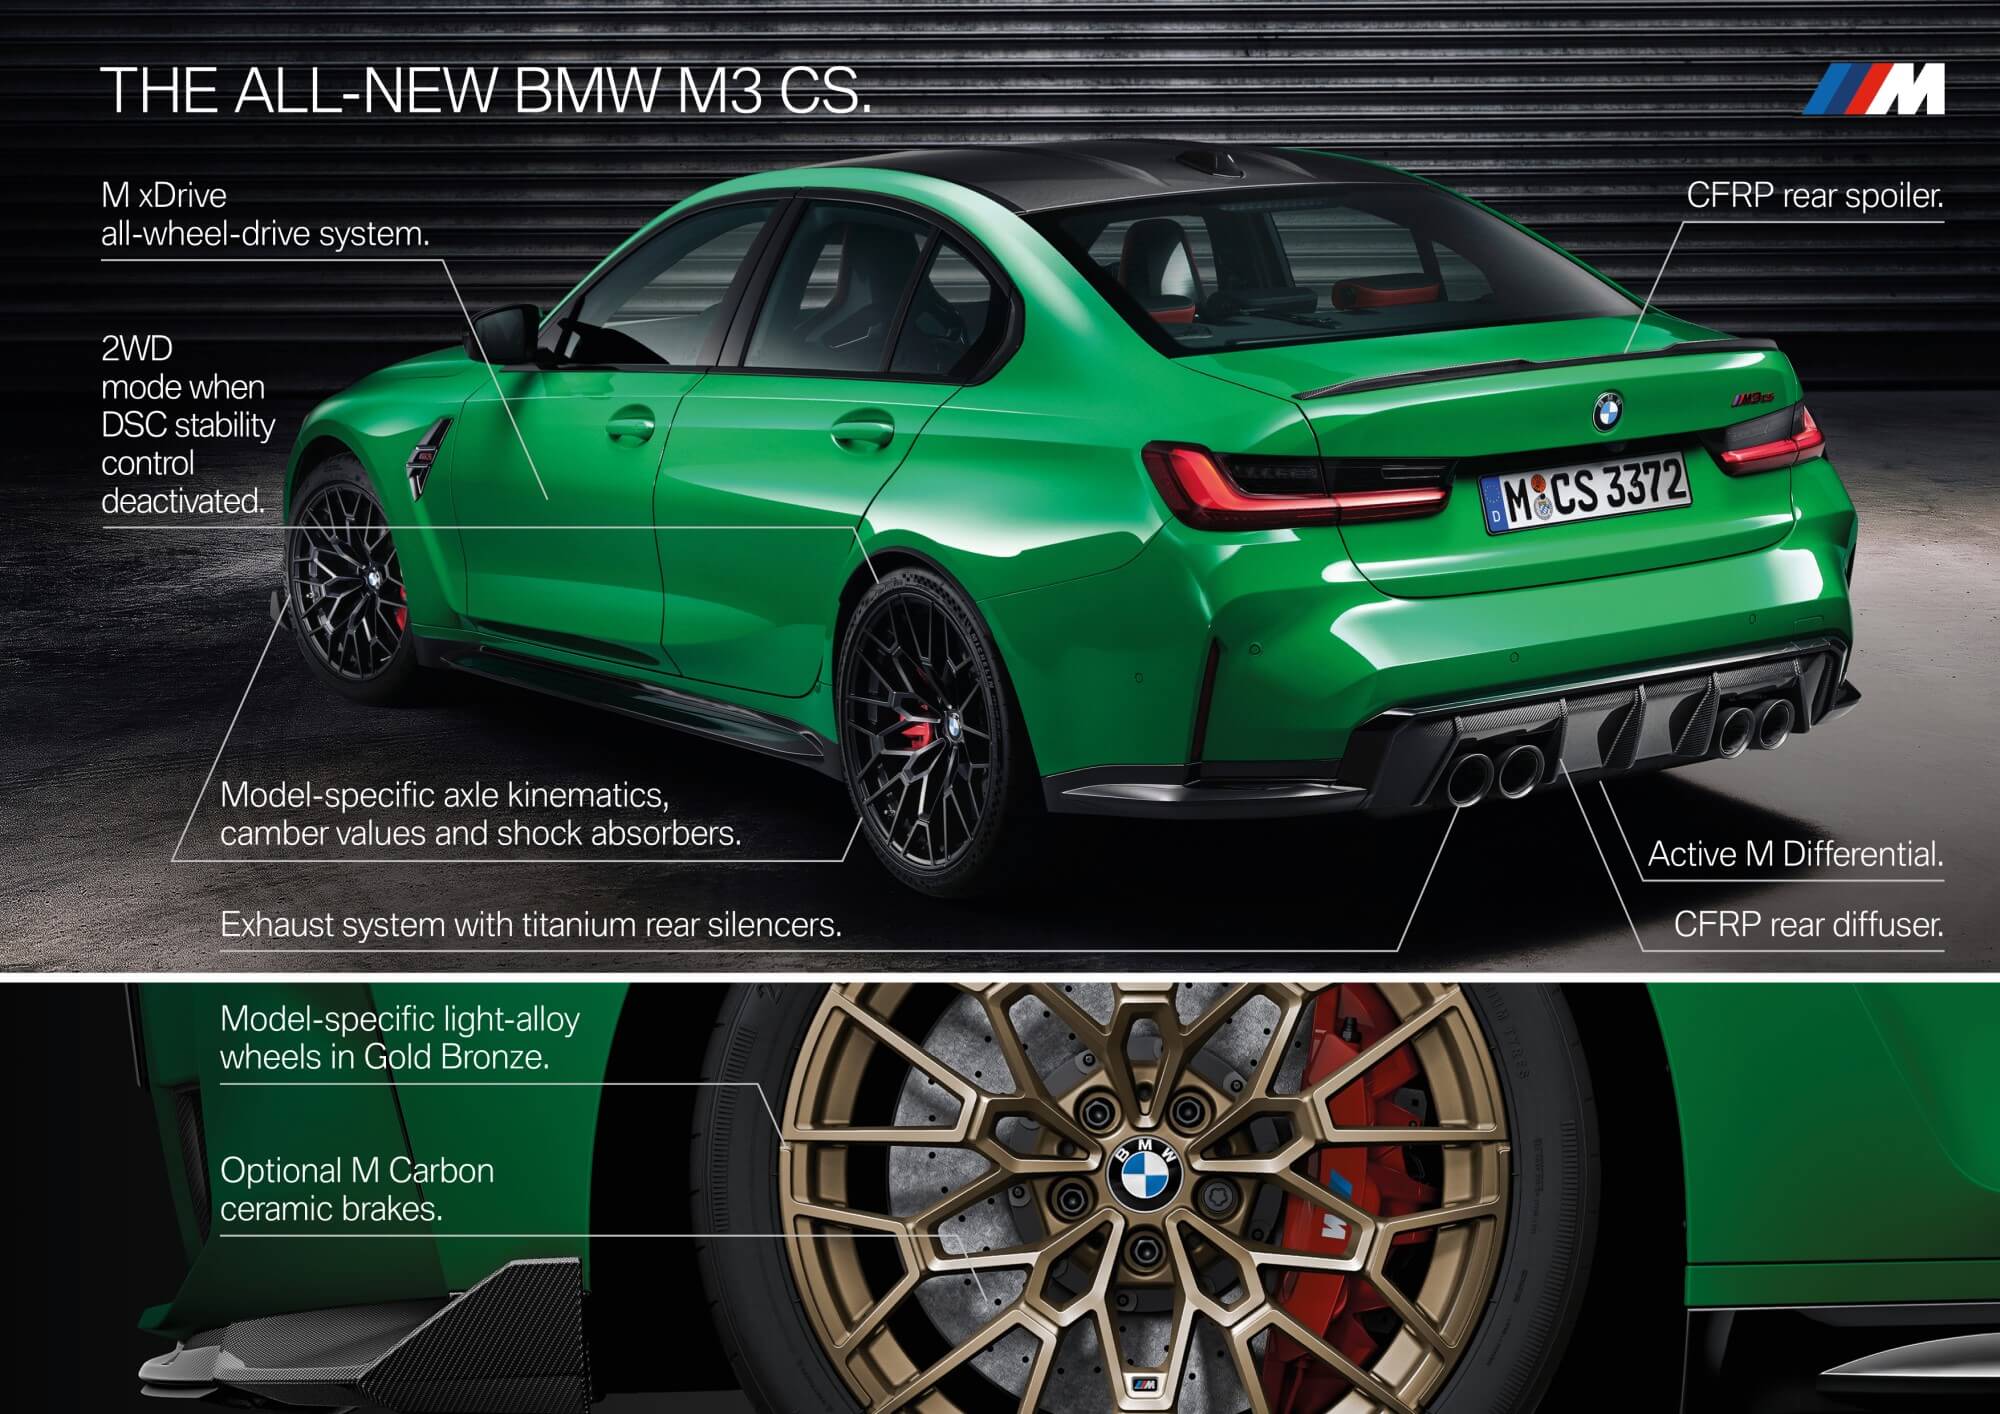 BMW M3 CS changes rear